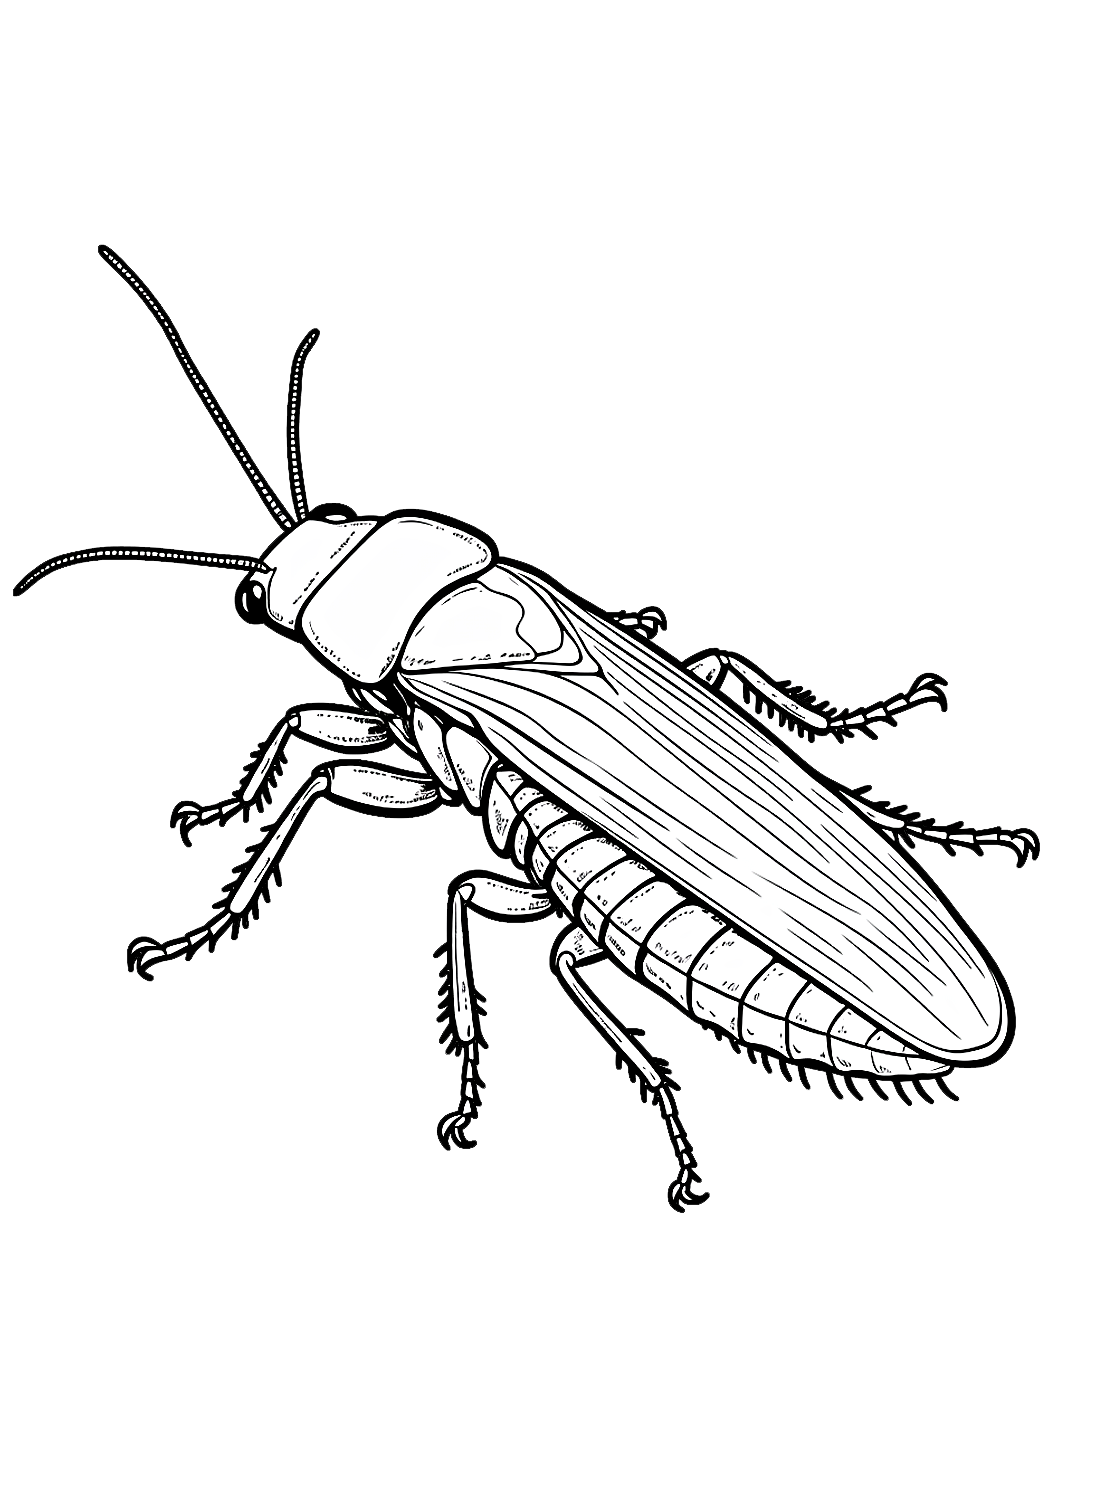 Een kakkerlak van Kakkerlak